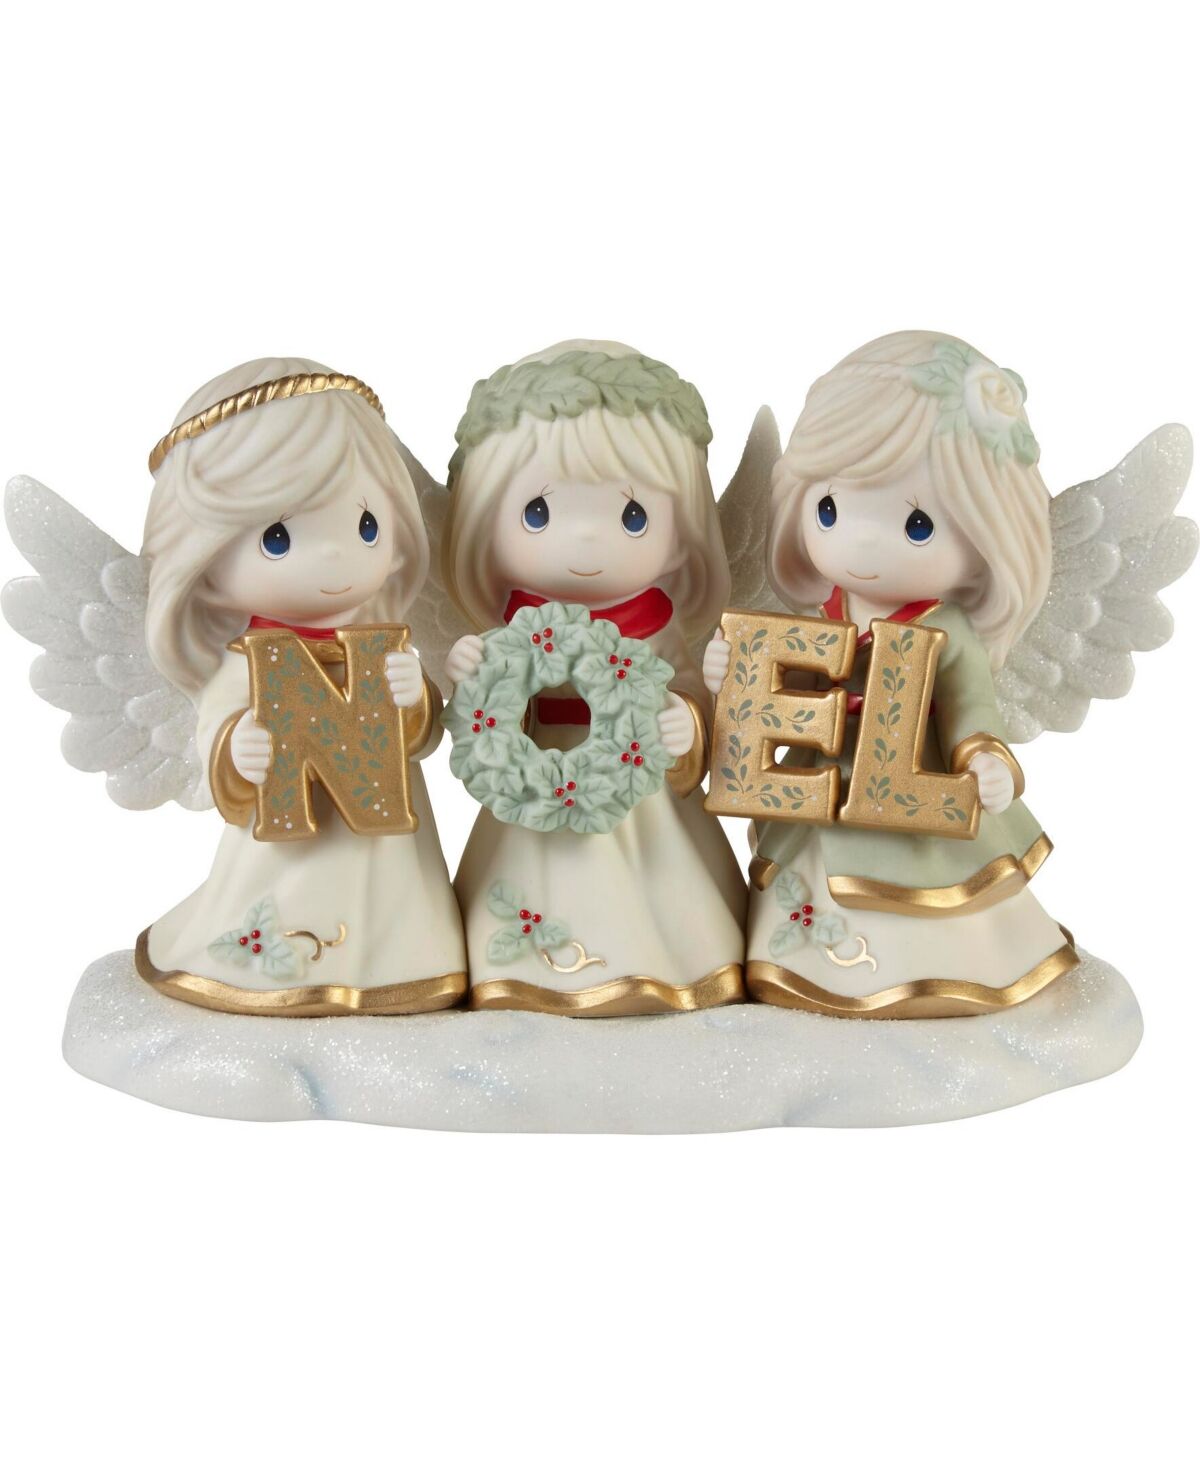 Precious Moments Joyeux Noel Limited Edition Bisque Porcelain Figurine - Multicolored